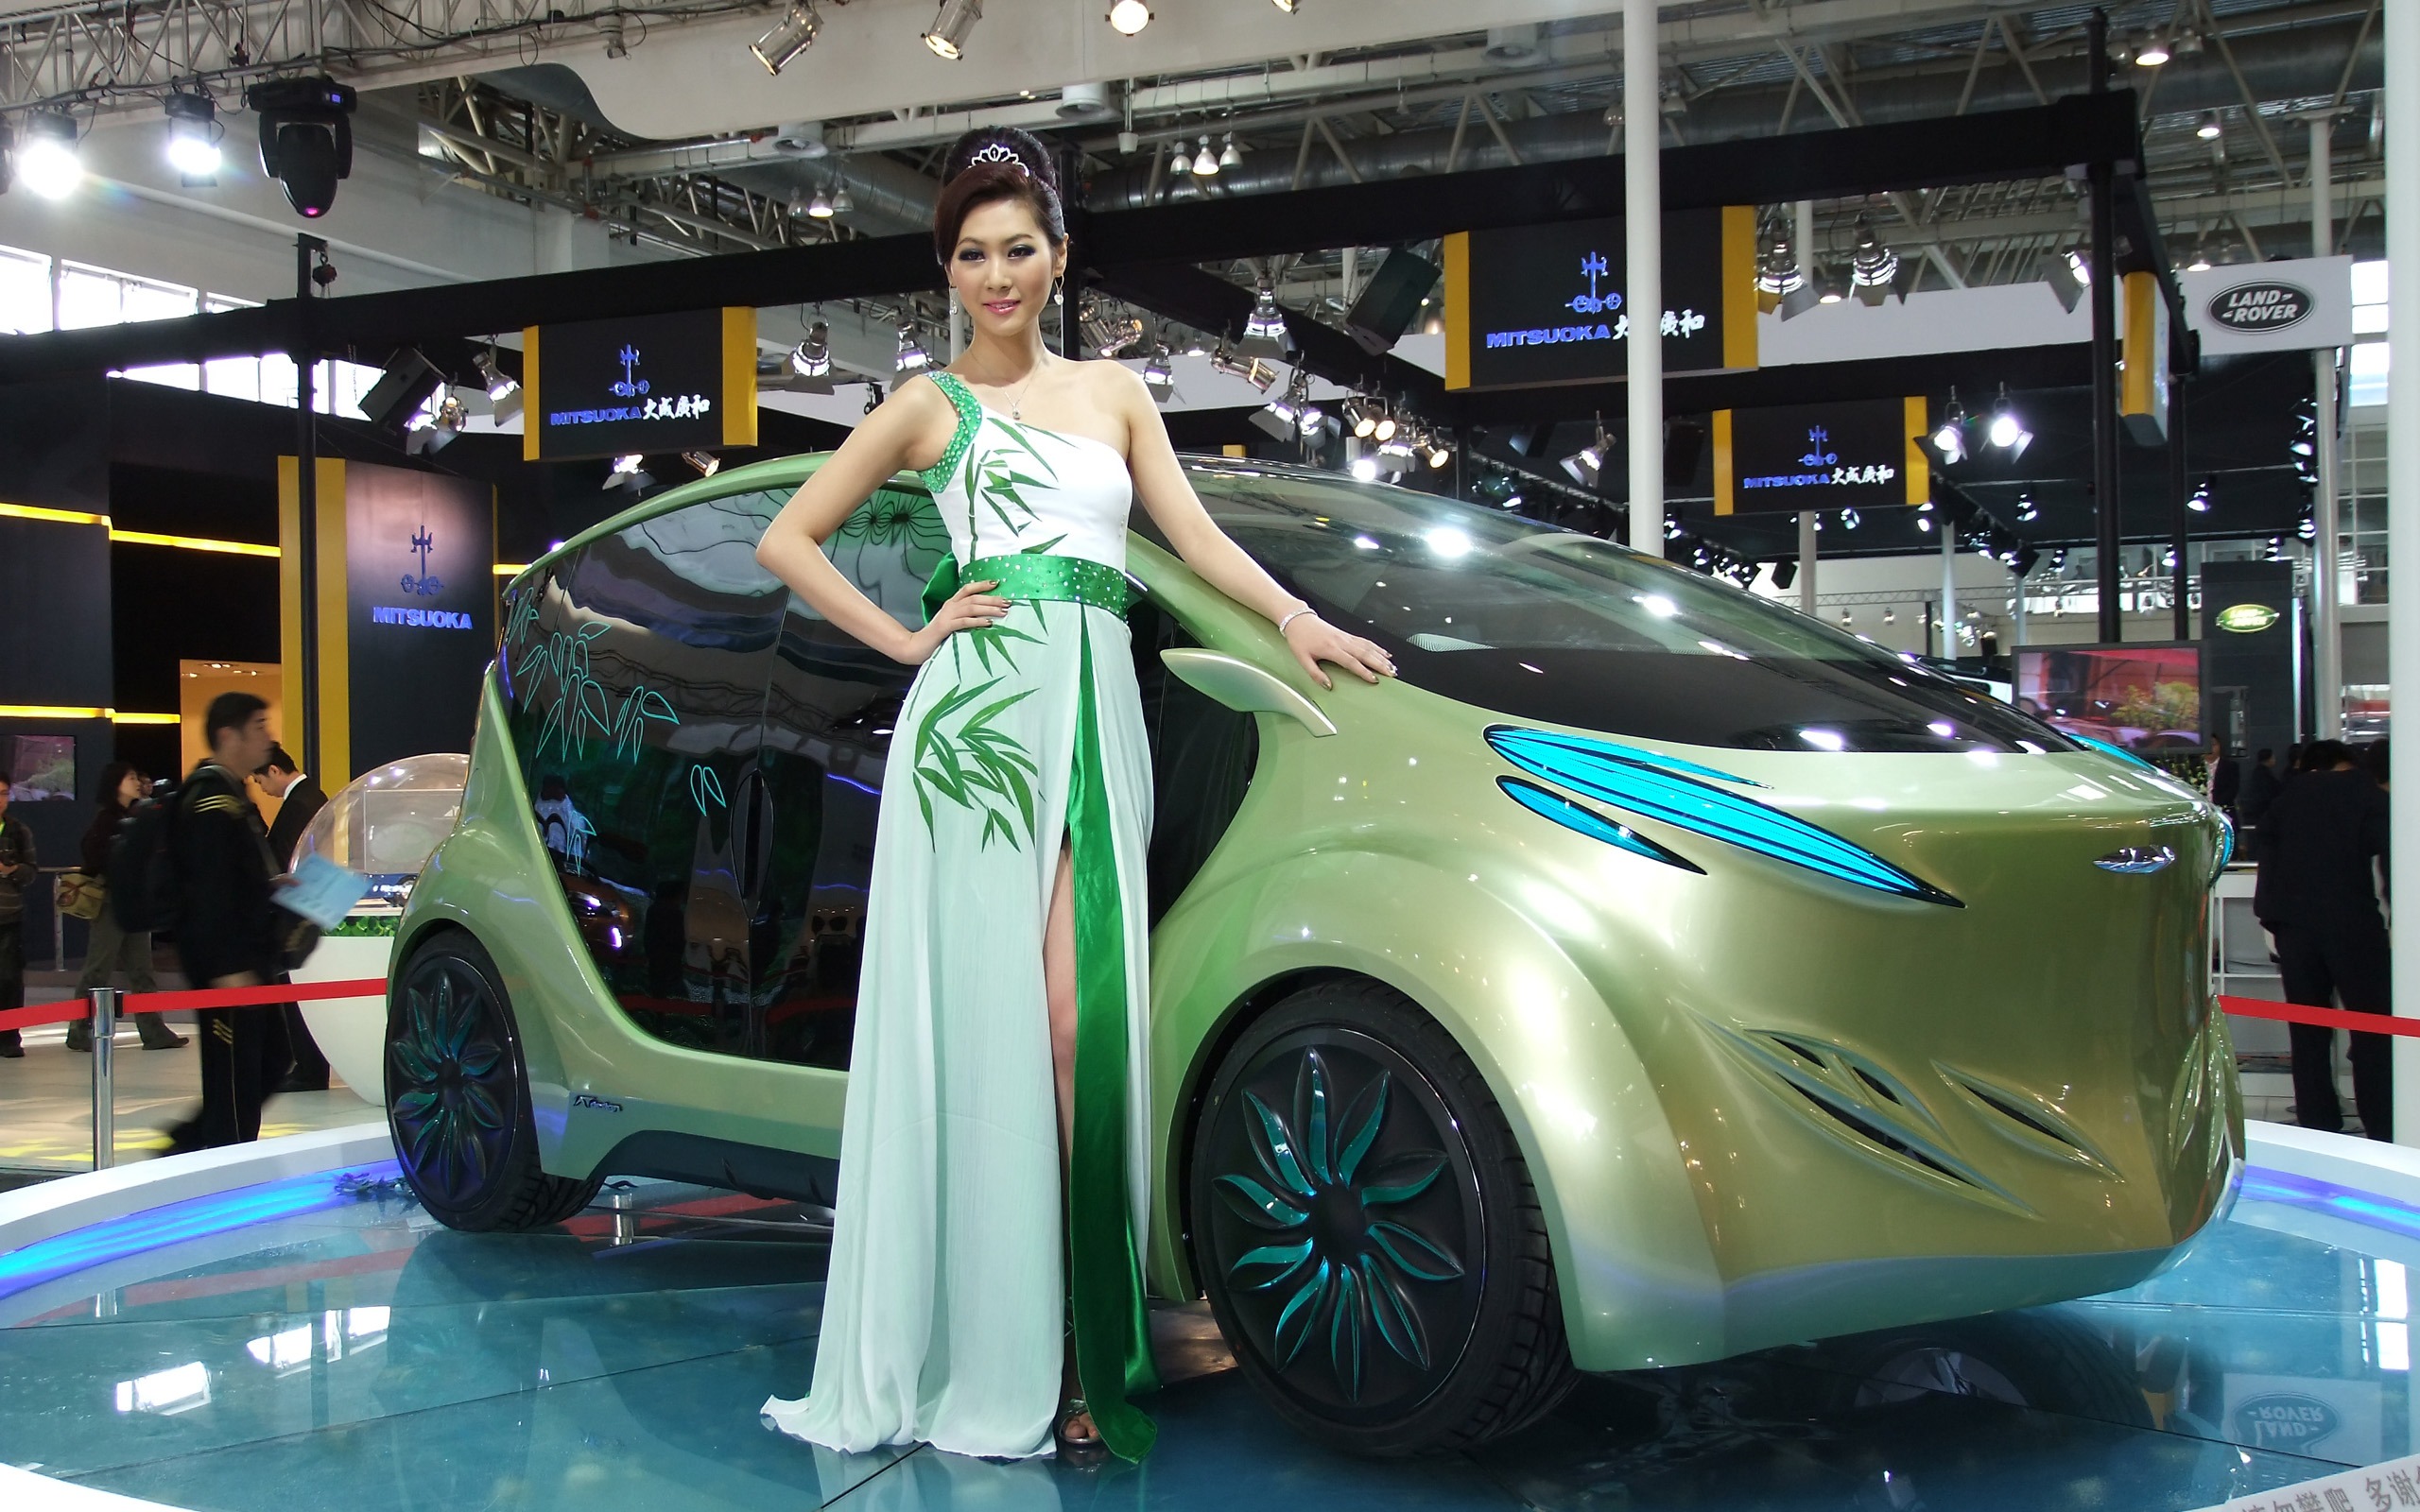 2010 Peking autosalonu modely aut odběrem (2) #2 - 2560x1600